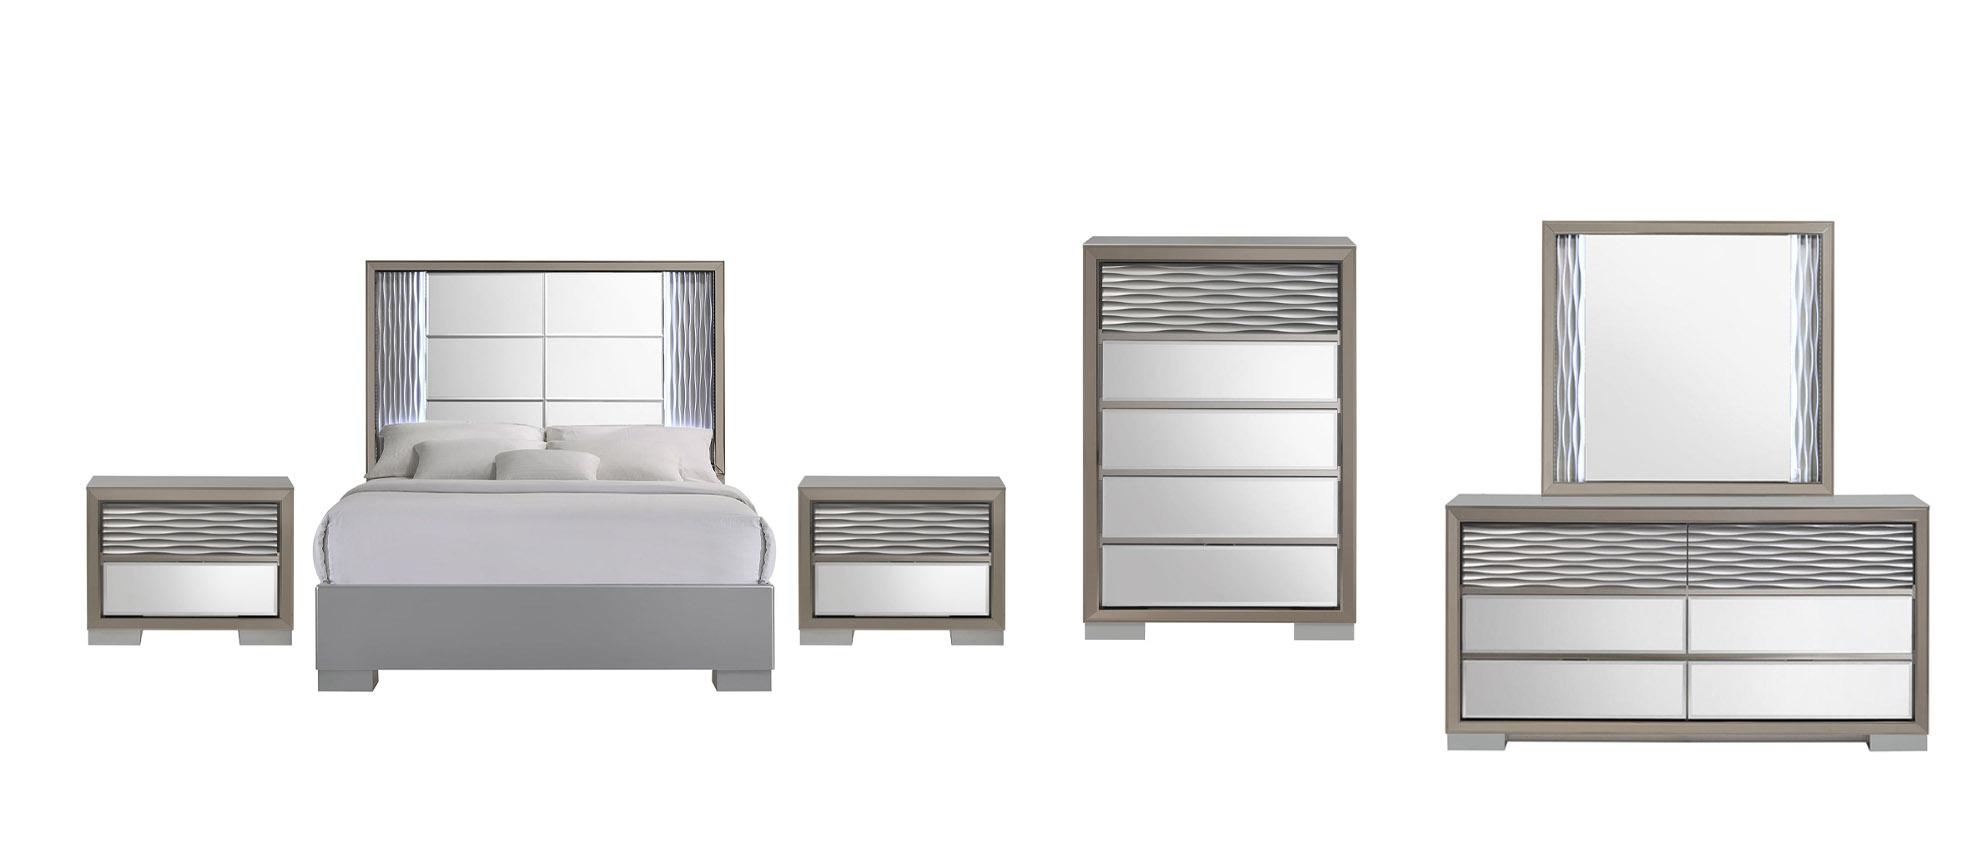 Contemporary Platform Bedroom Set SKYLINE SKYLINE-SILVER-QB-Set-6 in Mirrored, Silver 